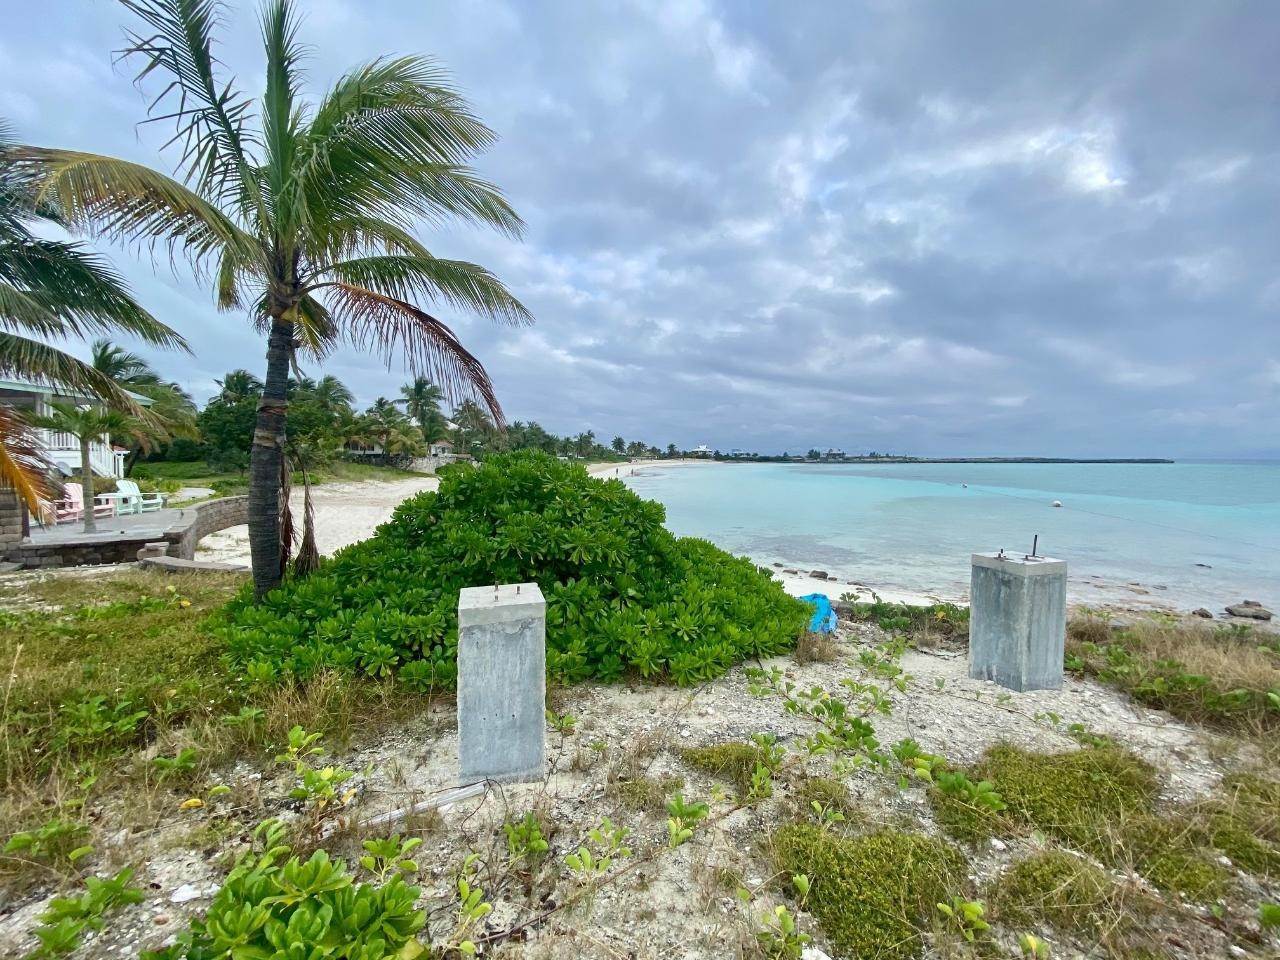 6. Lots / Acreage for Sale at Chub Cay, Berry Islands Bahamas